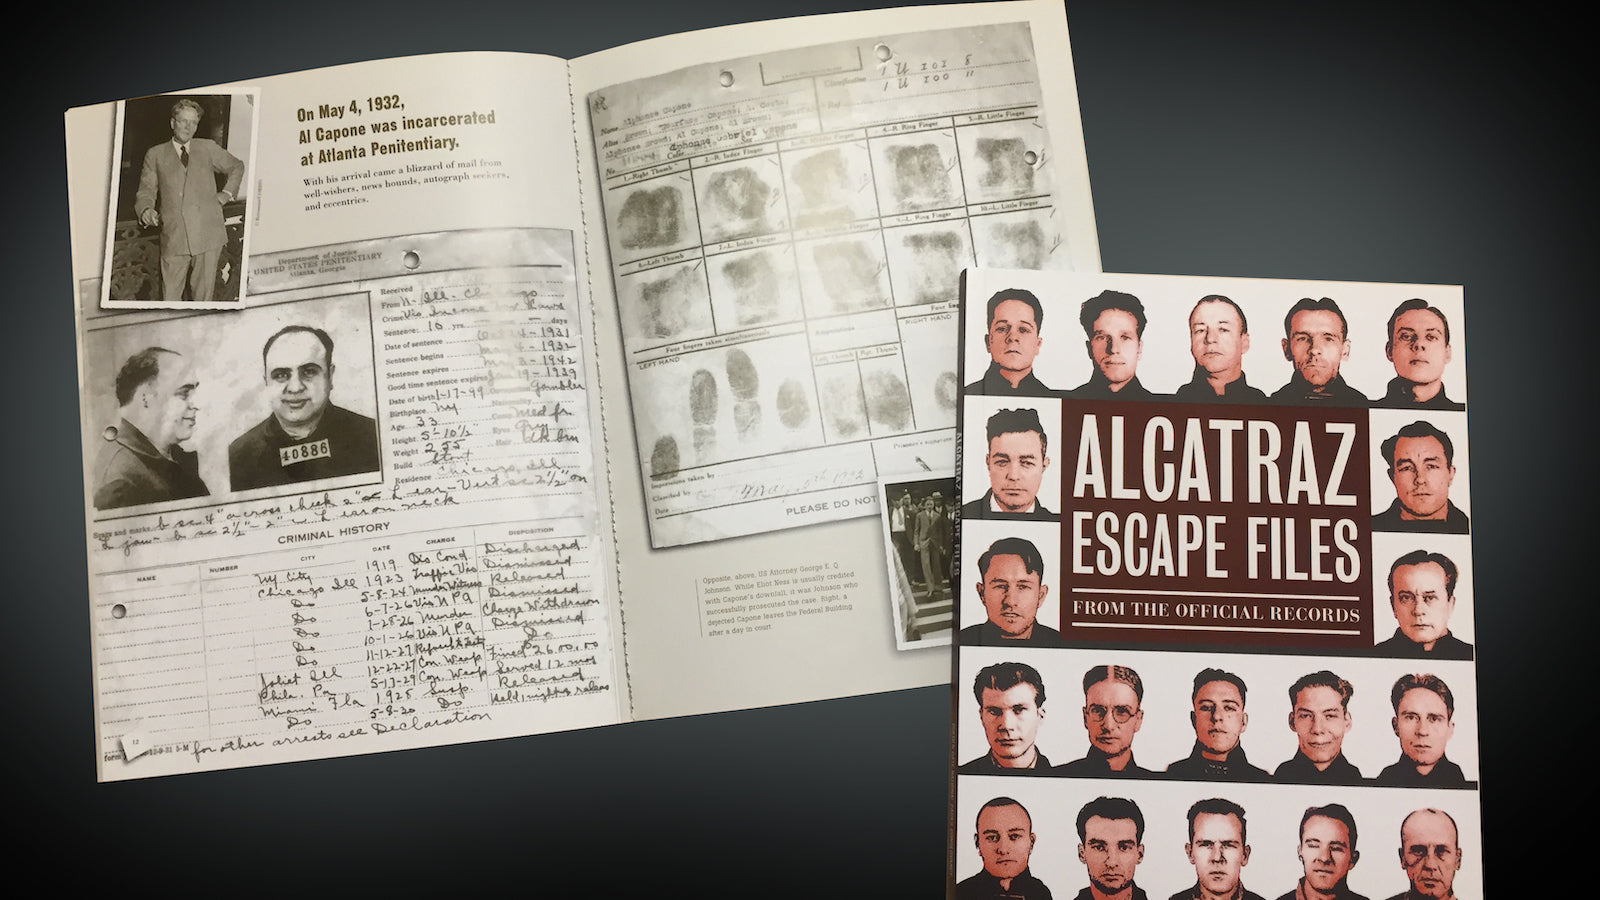 Alcatraz Escape Files book by the Golden Gate National Parks Conservancy.